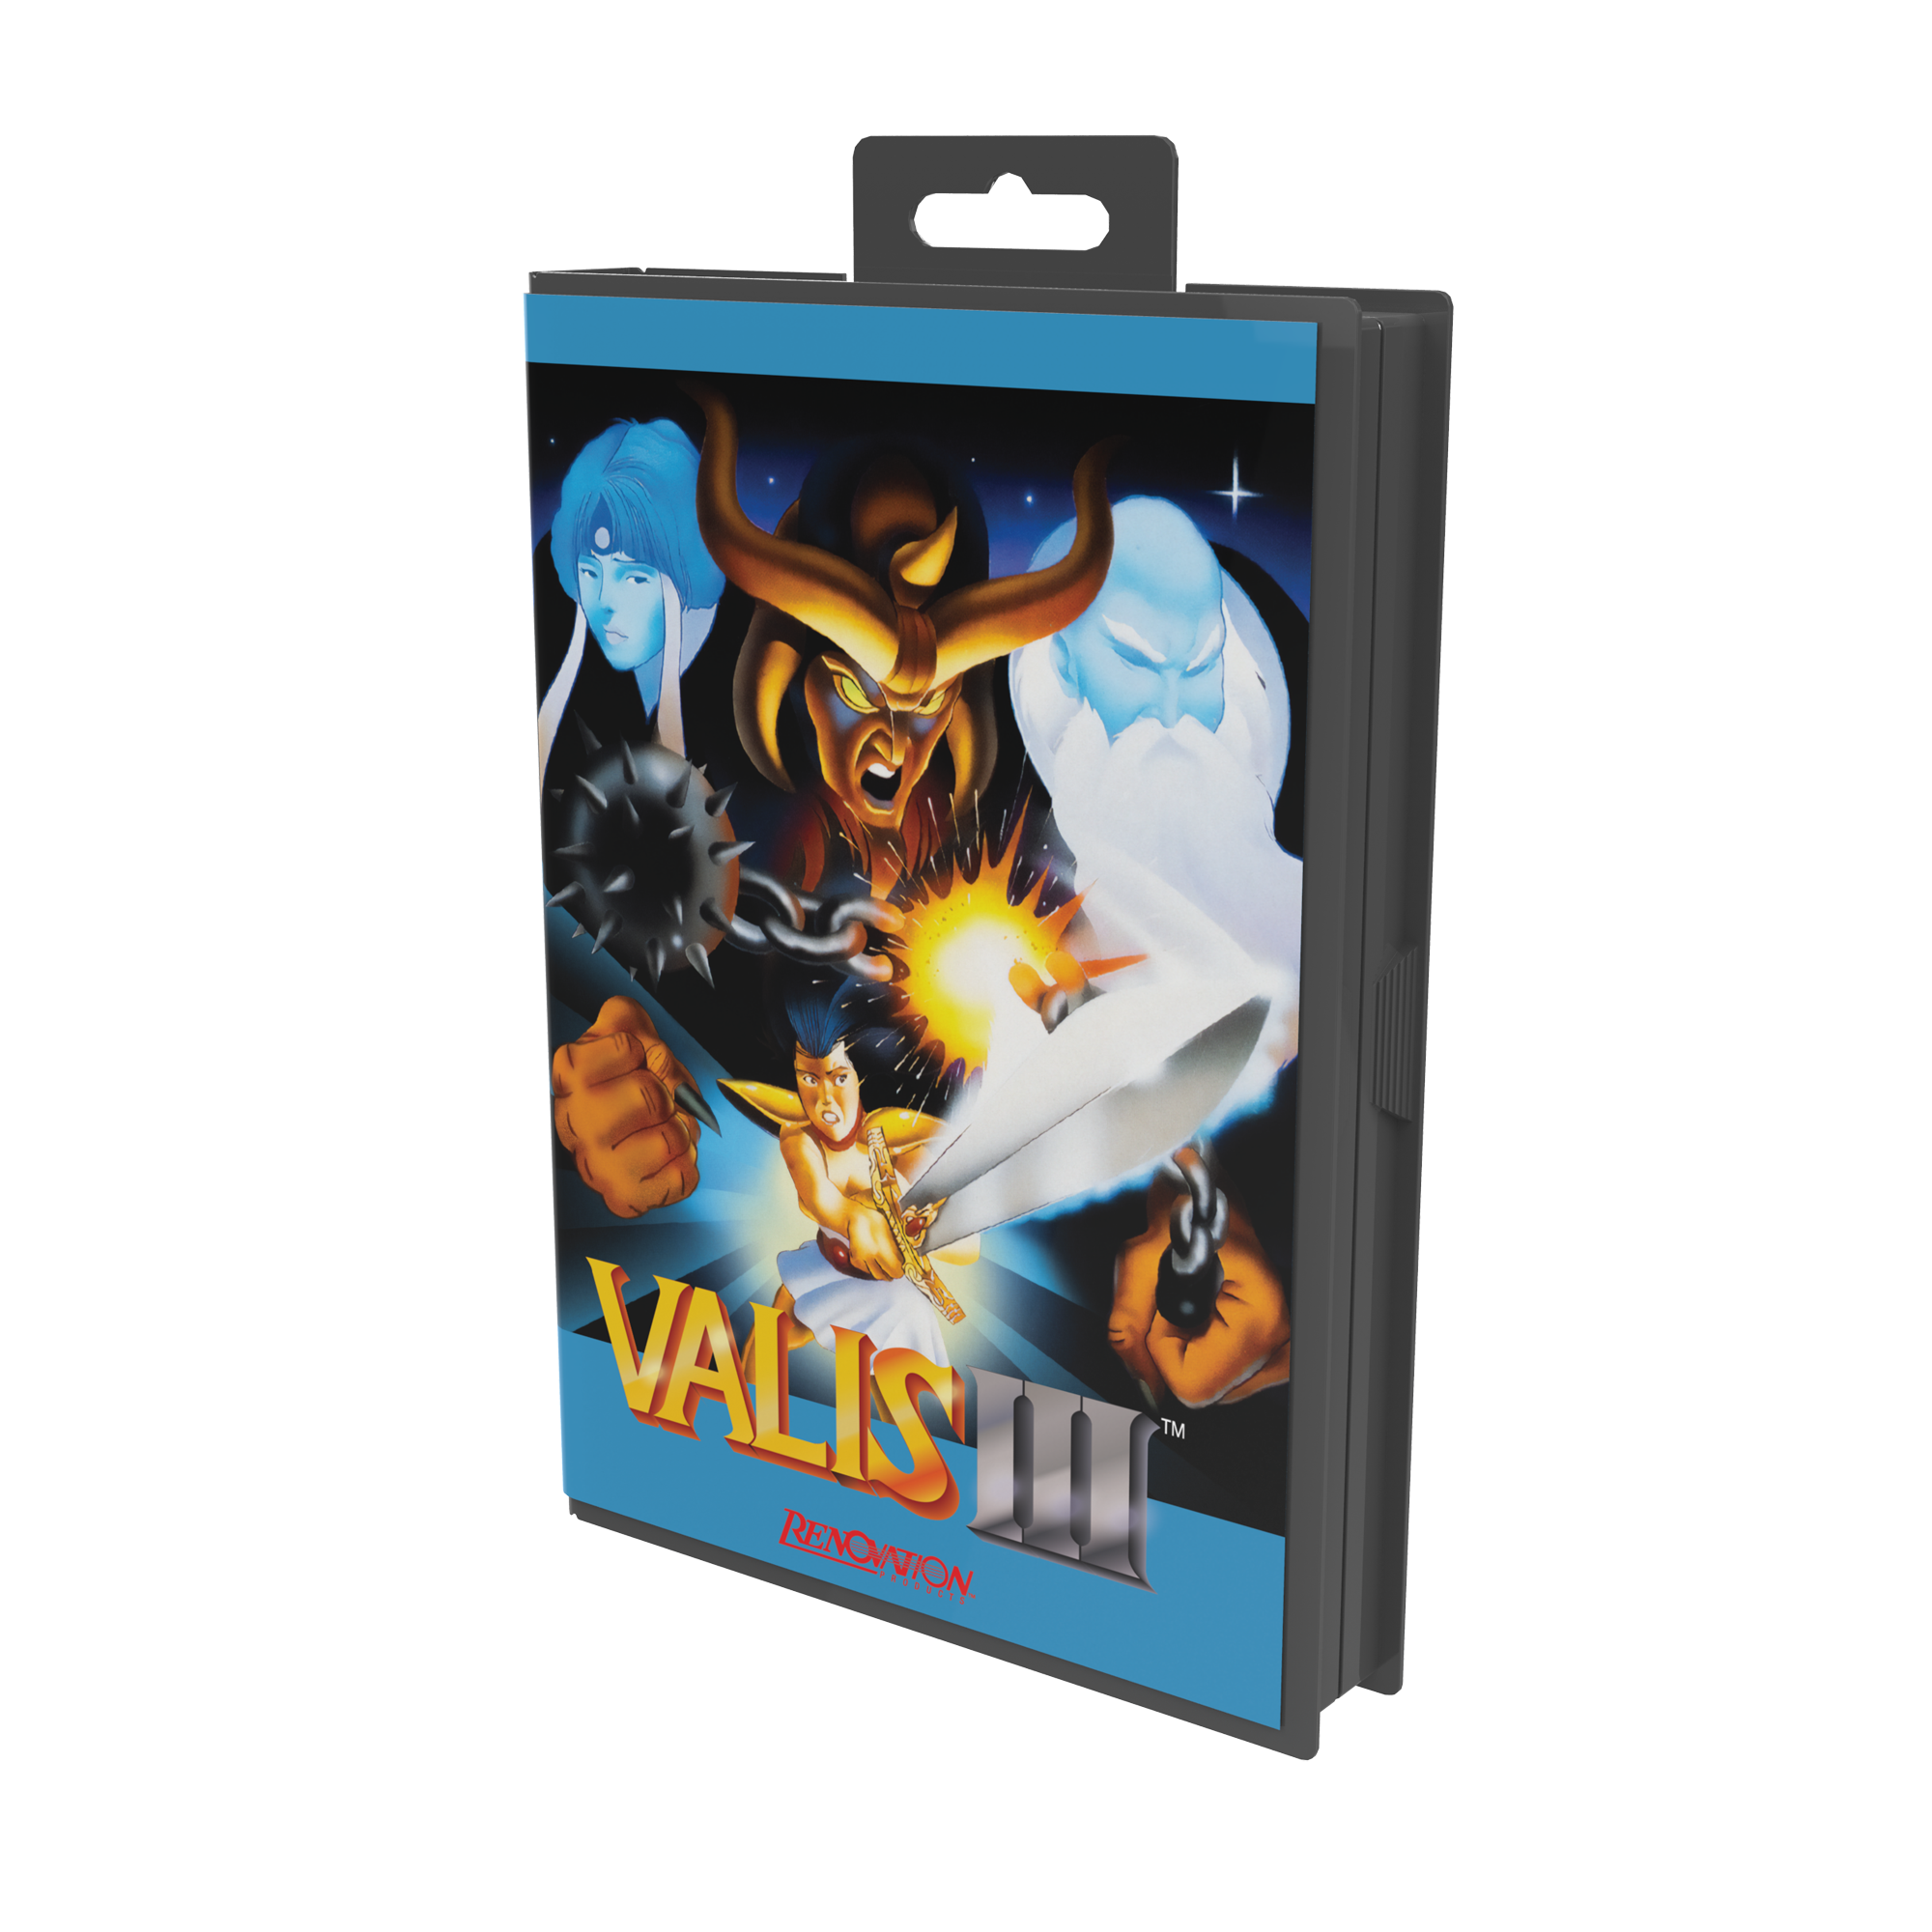 ValisCollectionPressKit Valis III Cover B 02.png